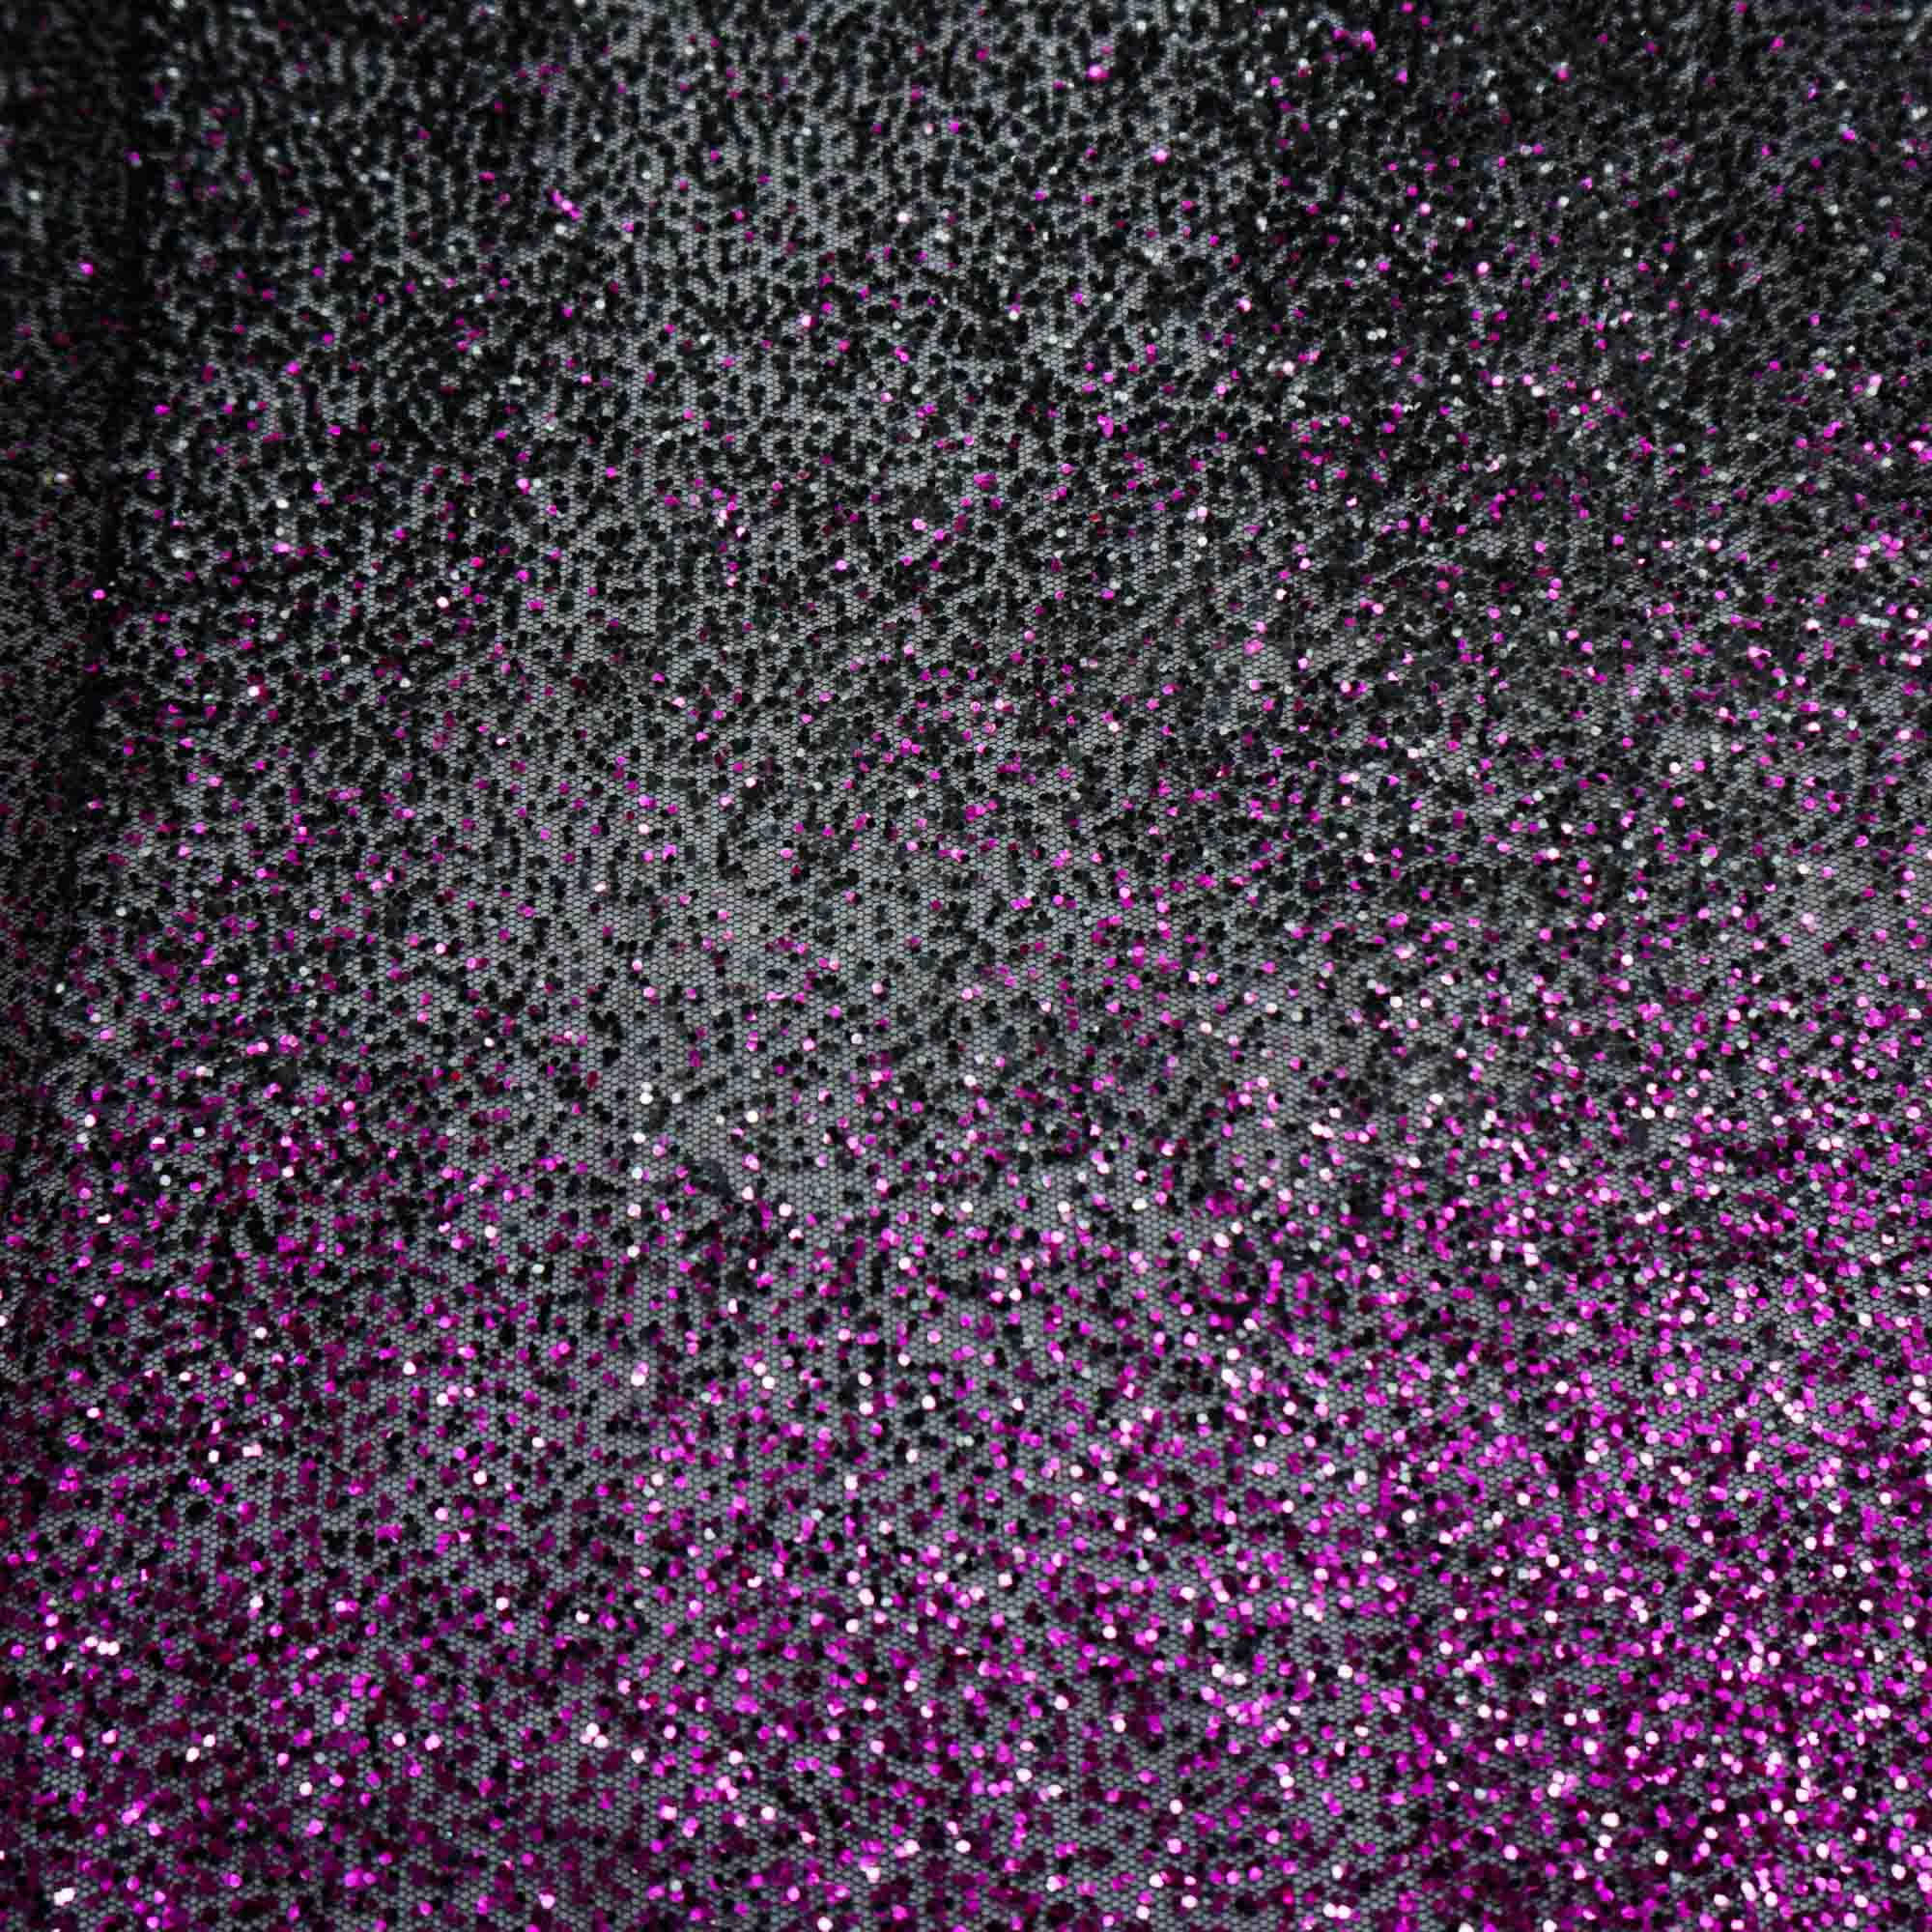 Tecido renda tule bordado com glitter cheio degradê preto/pink und 80cm x 150cm